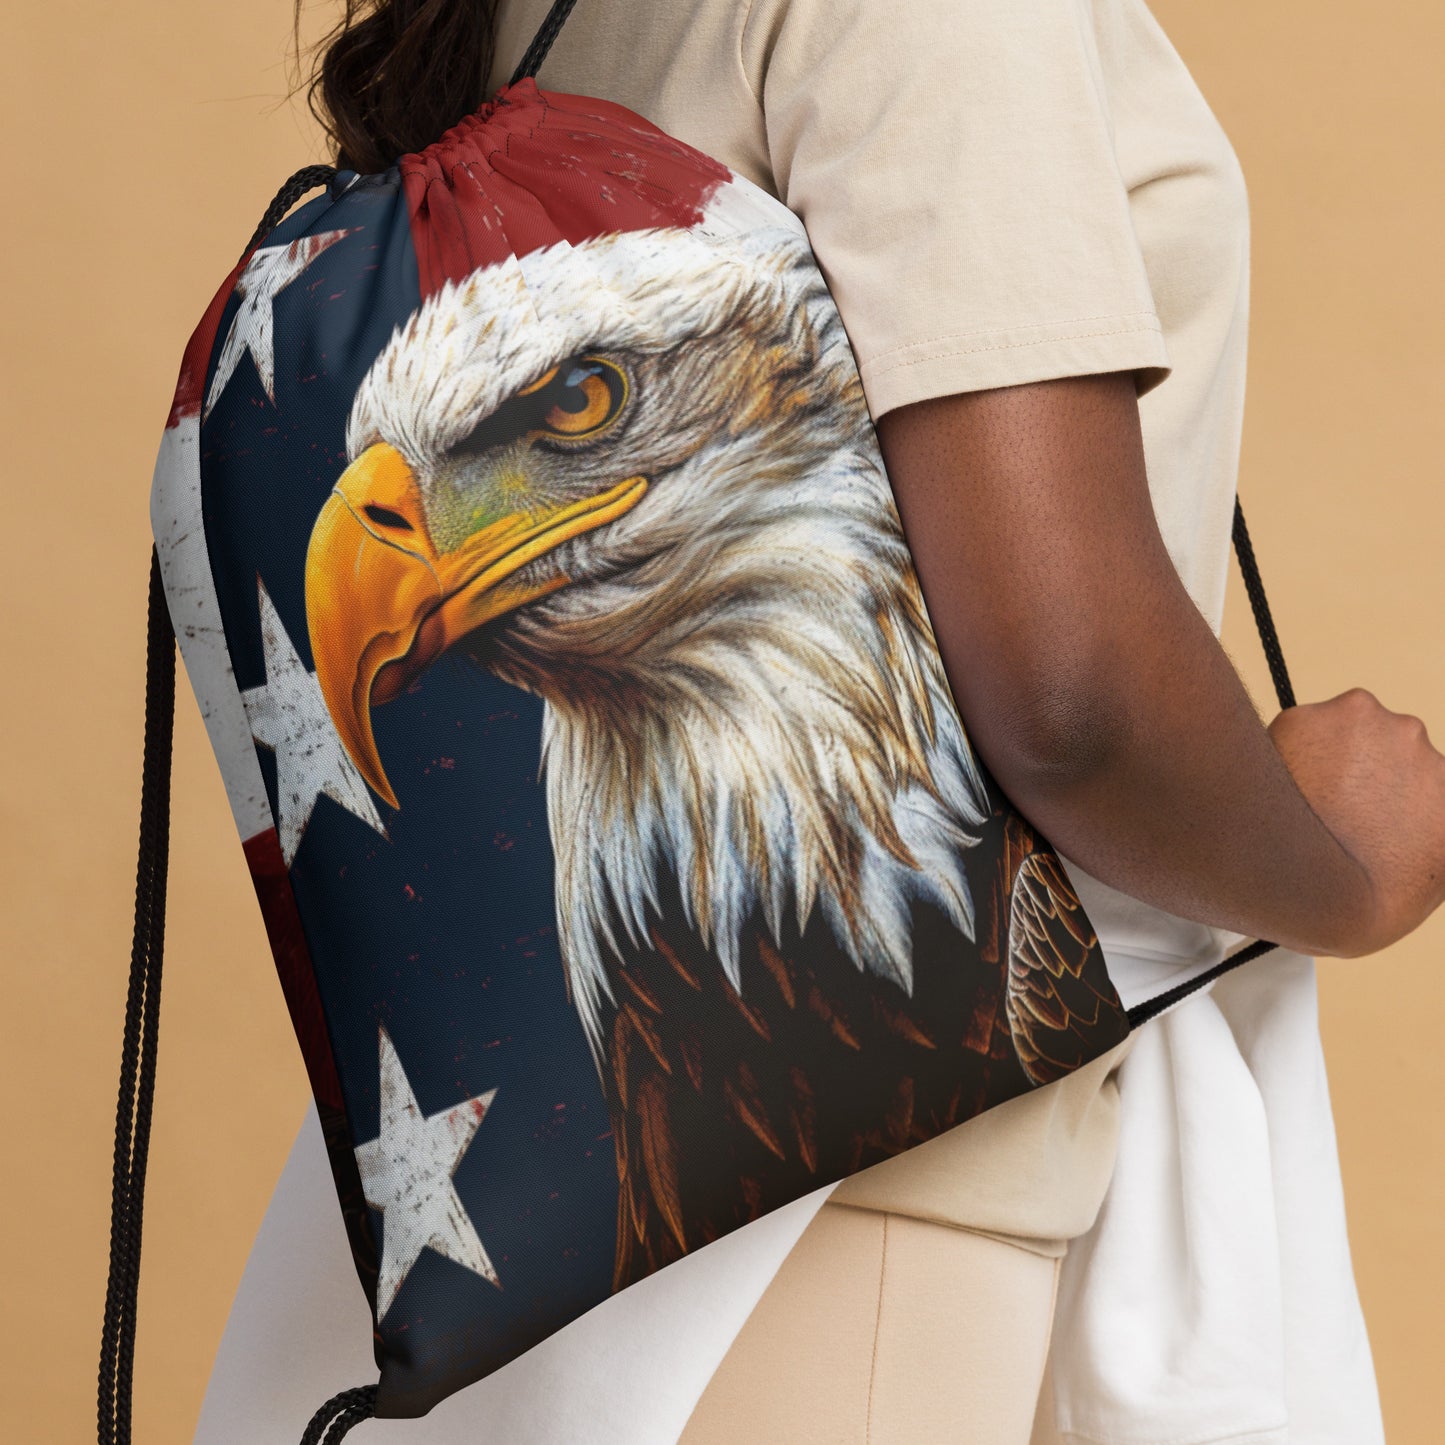 Eagle Drawstring bag